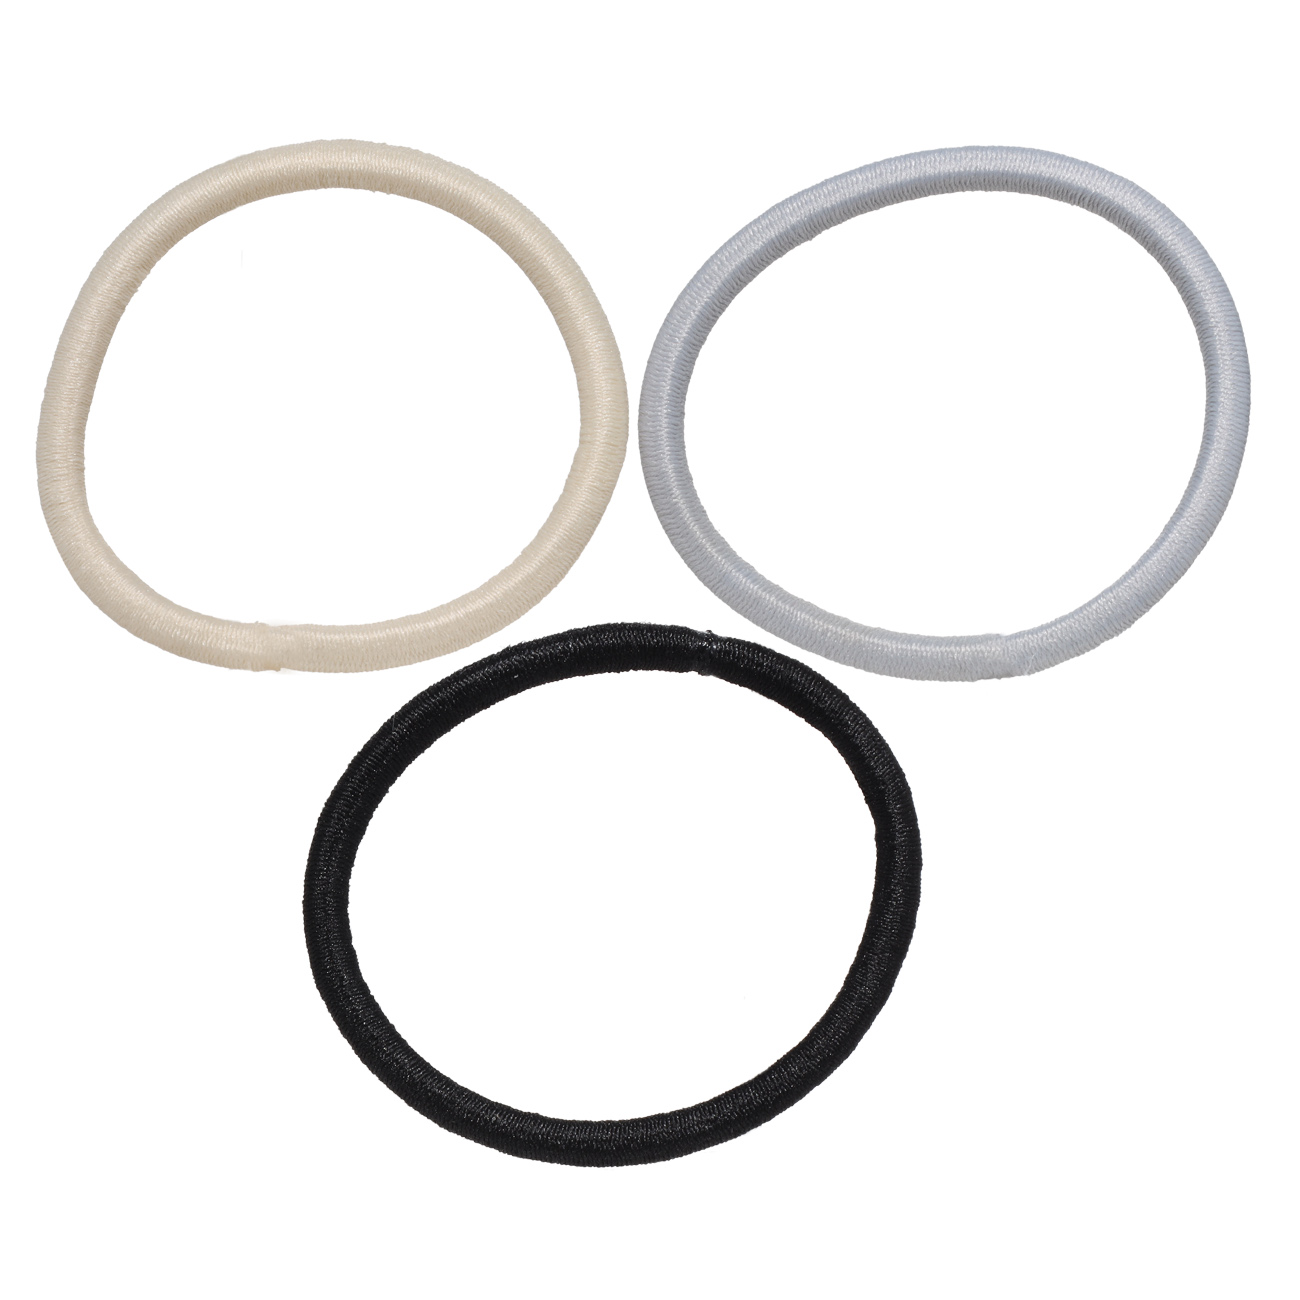 Elastic band for hair, 5 cm, 24 pcs, polyester, black/gray / beige, Basic изображение № 2